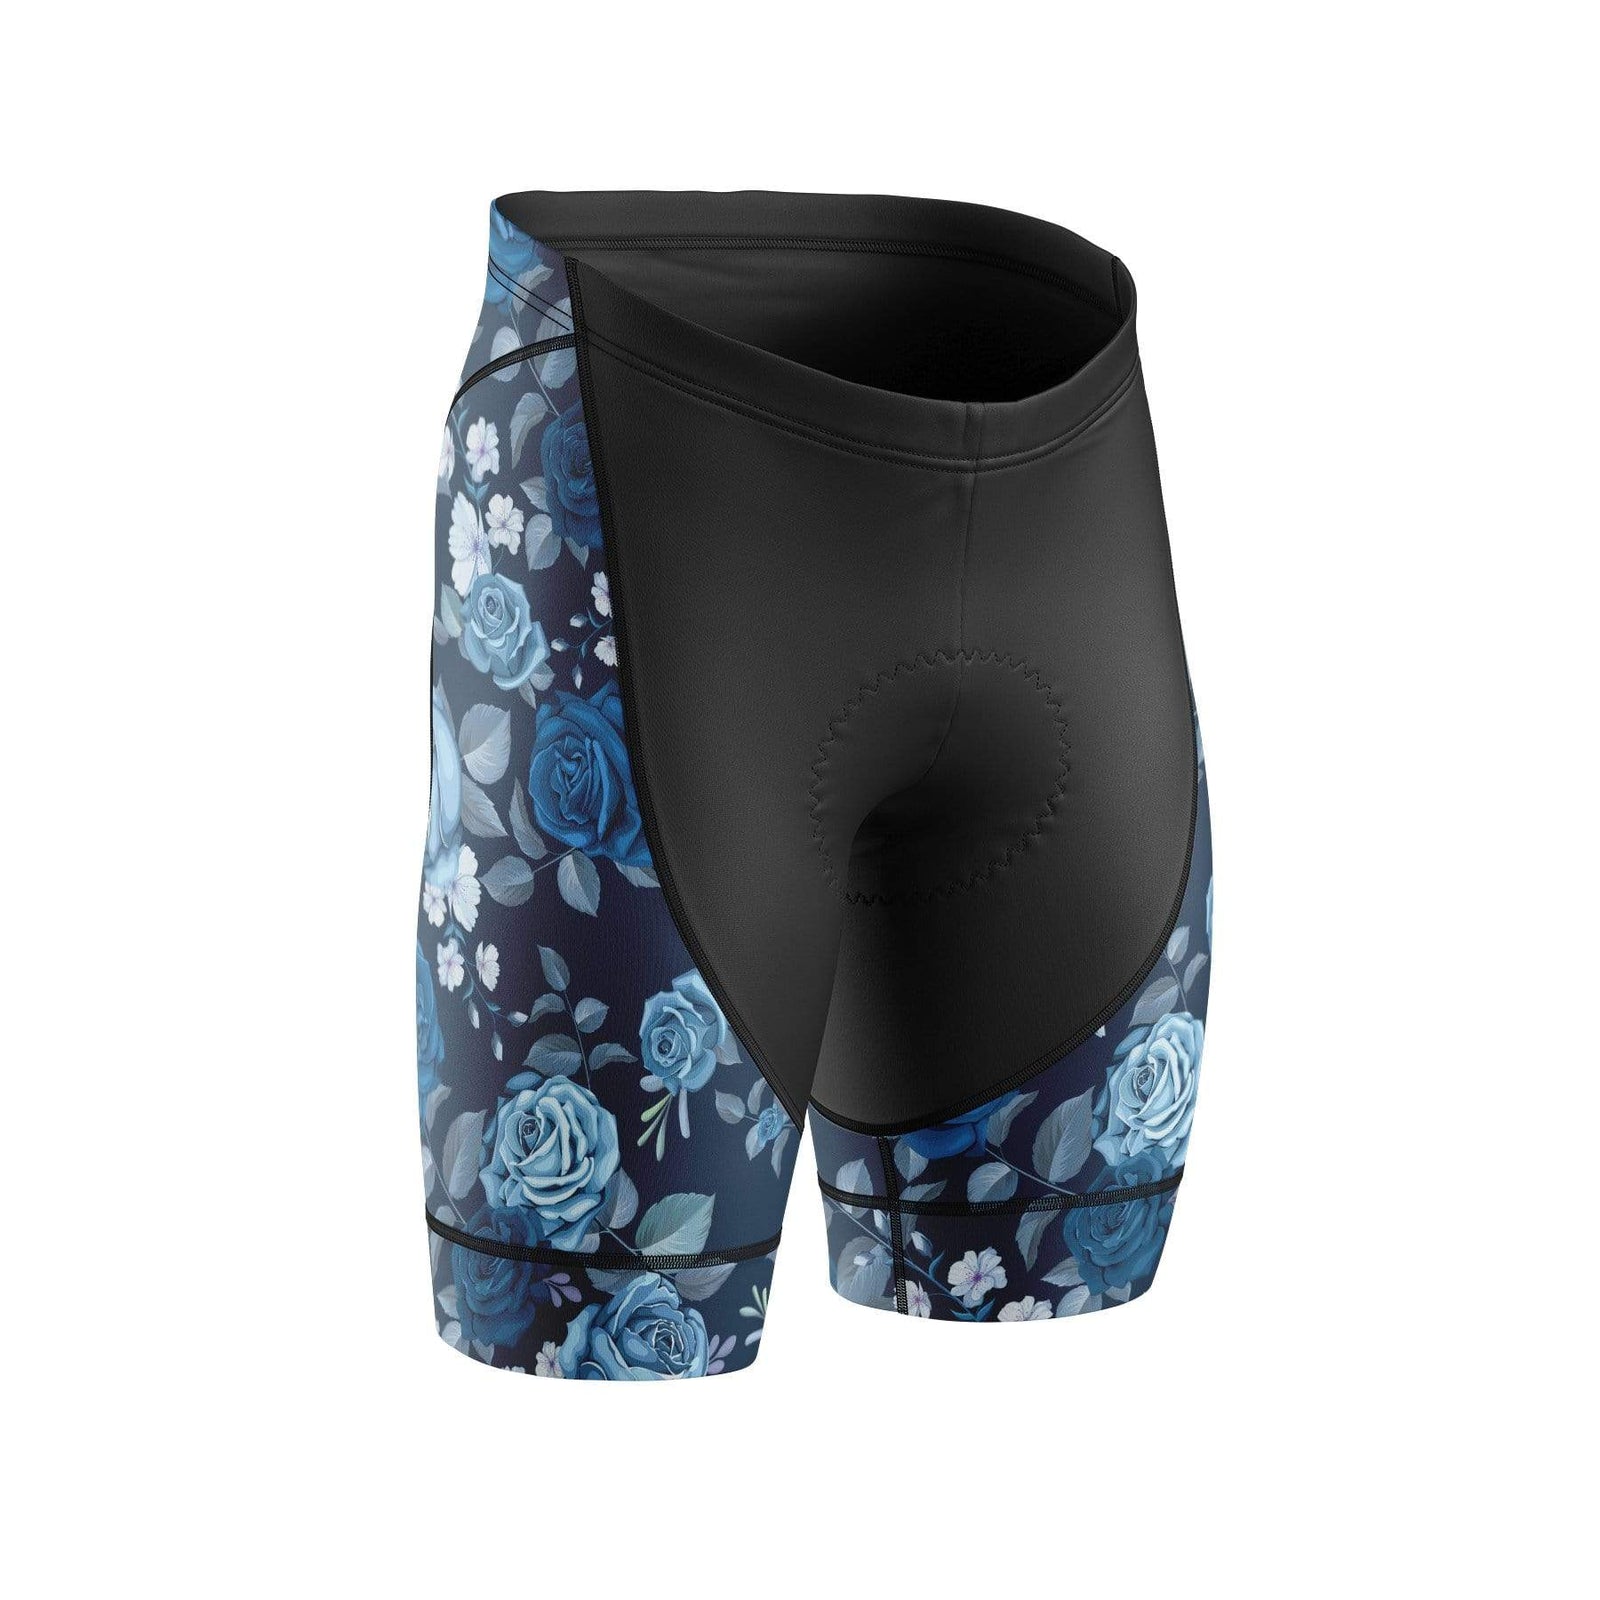 Montella Cycling Cycling Kit XXS / Shorts Only Women's Roses Cycling Jersey or Bibs